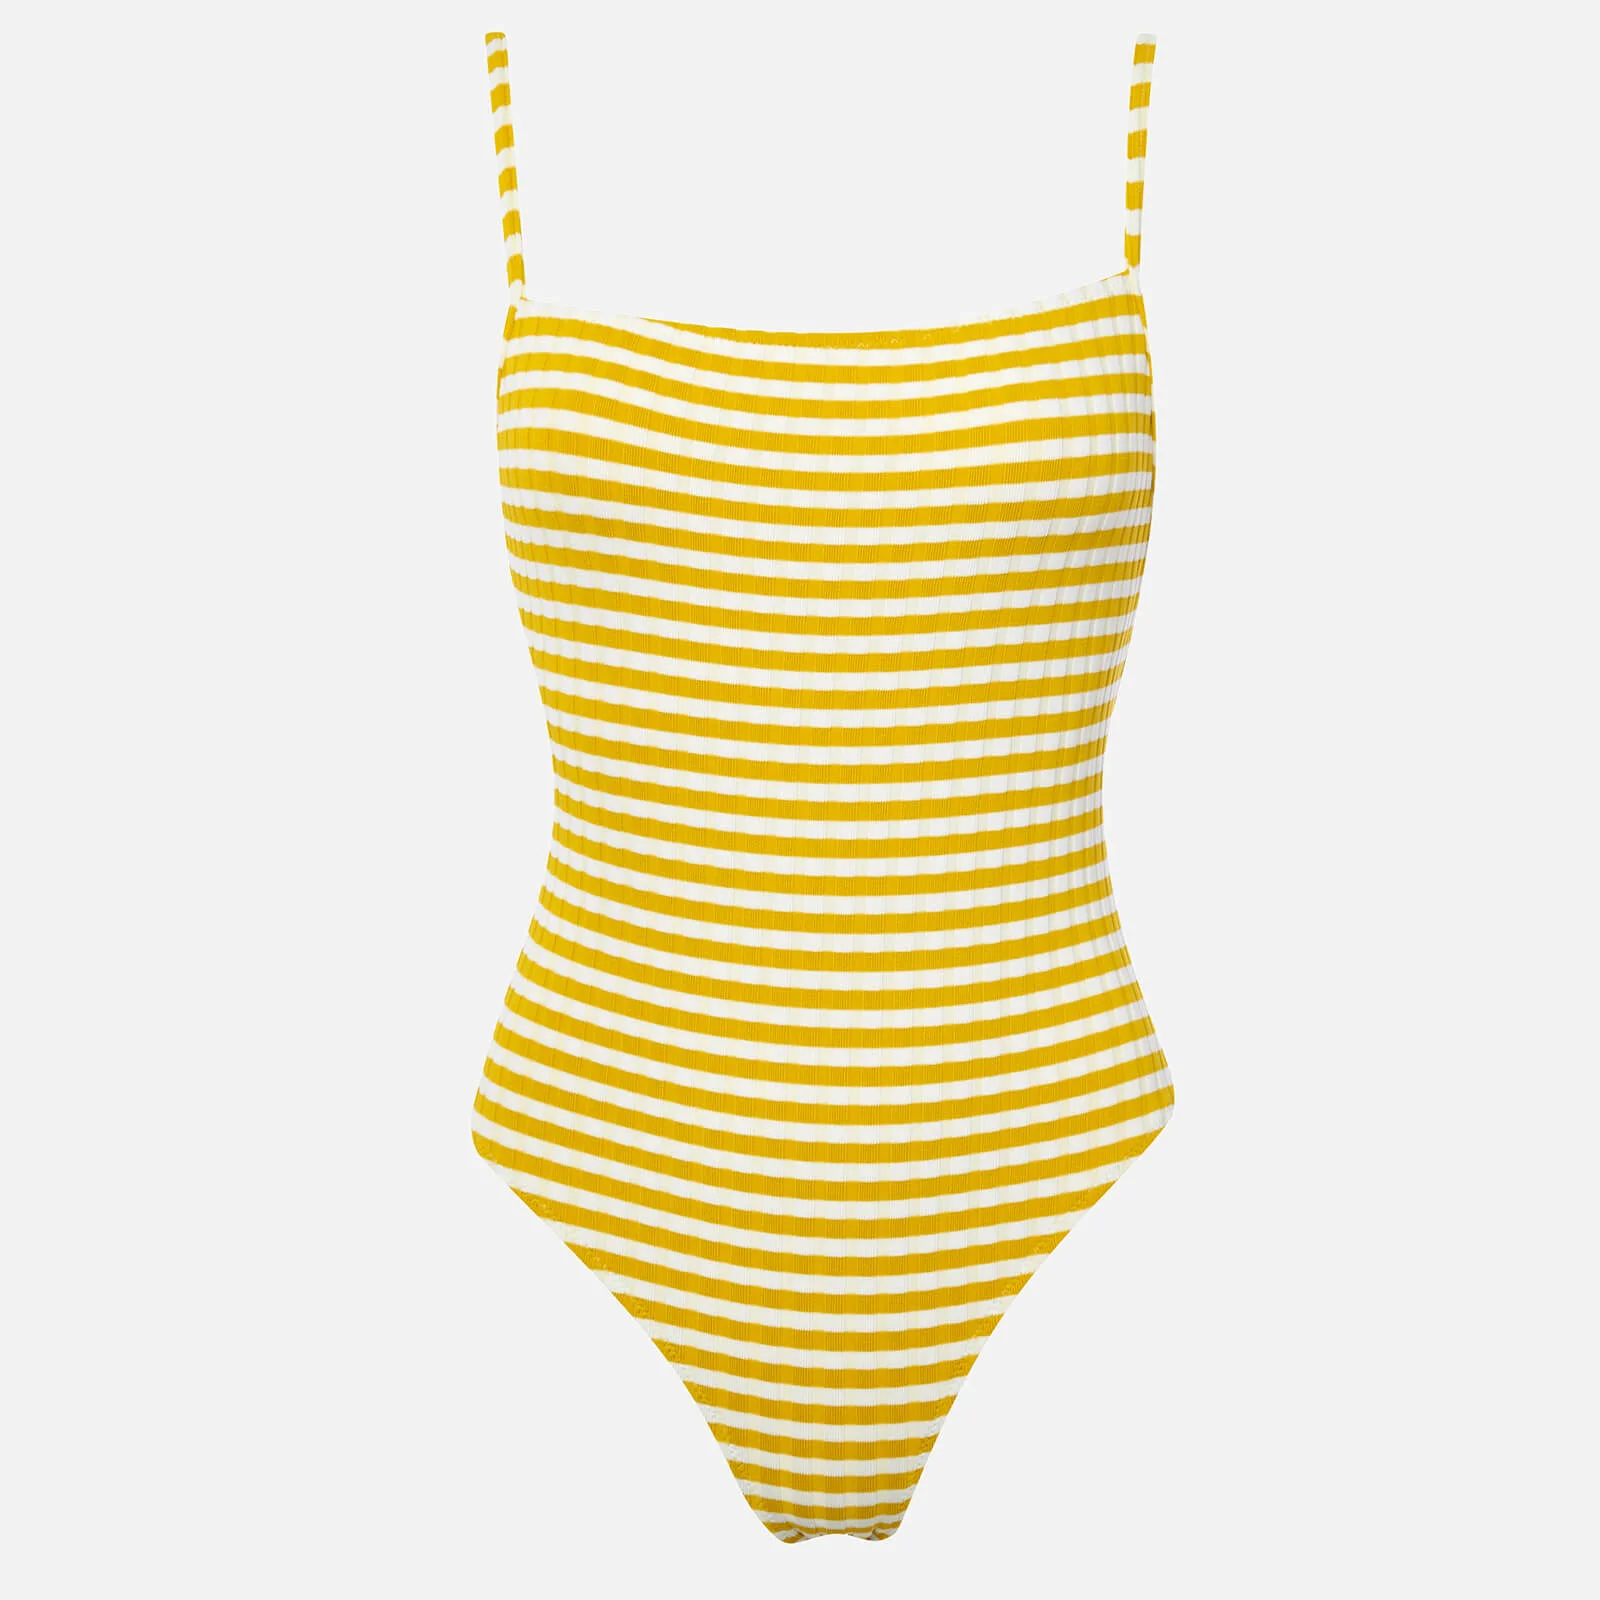 Solid & Striped Women's The Chelsea Swimsuit - Mustard Stripe Rib Image 1